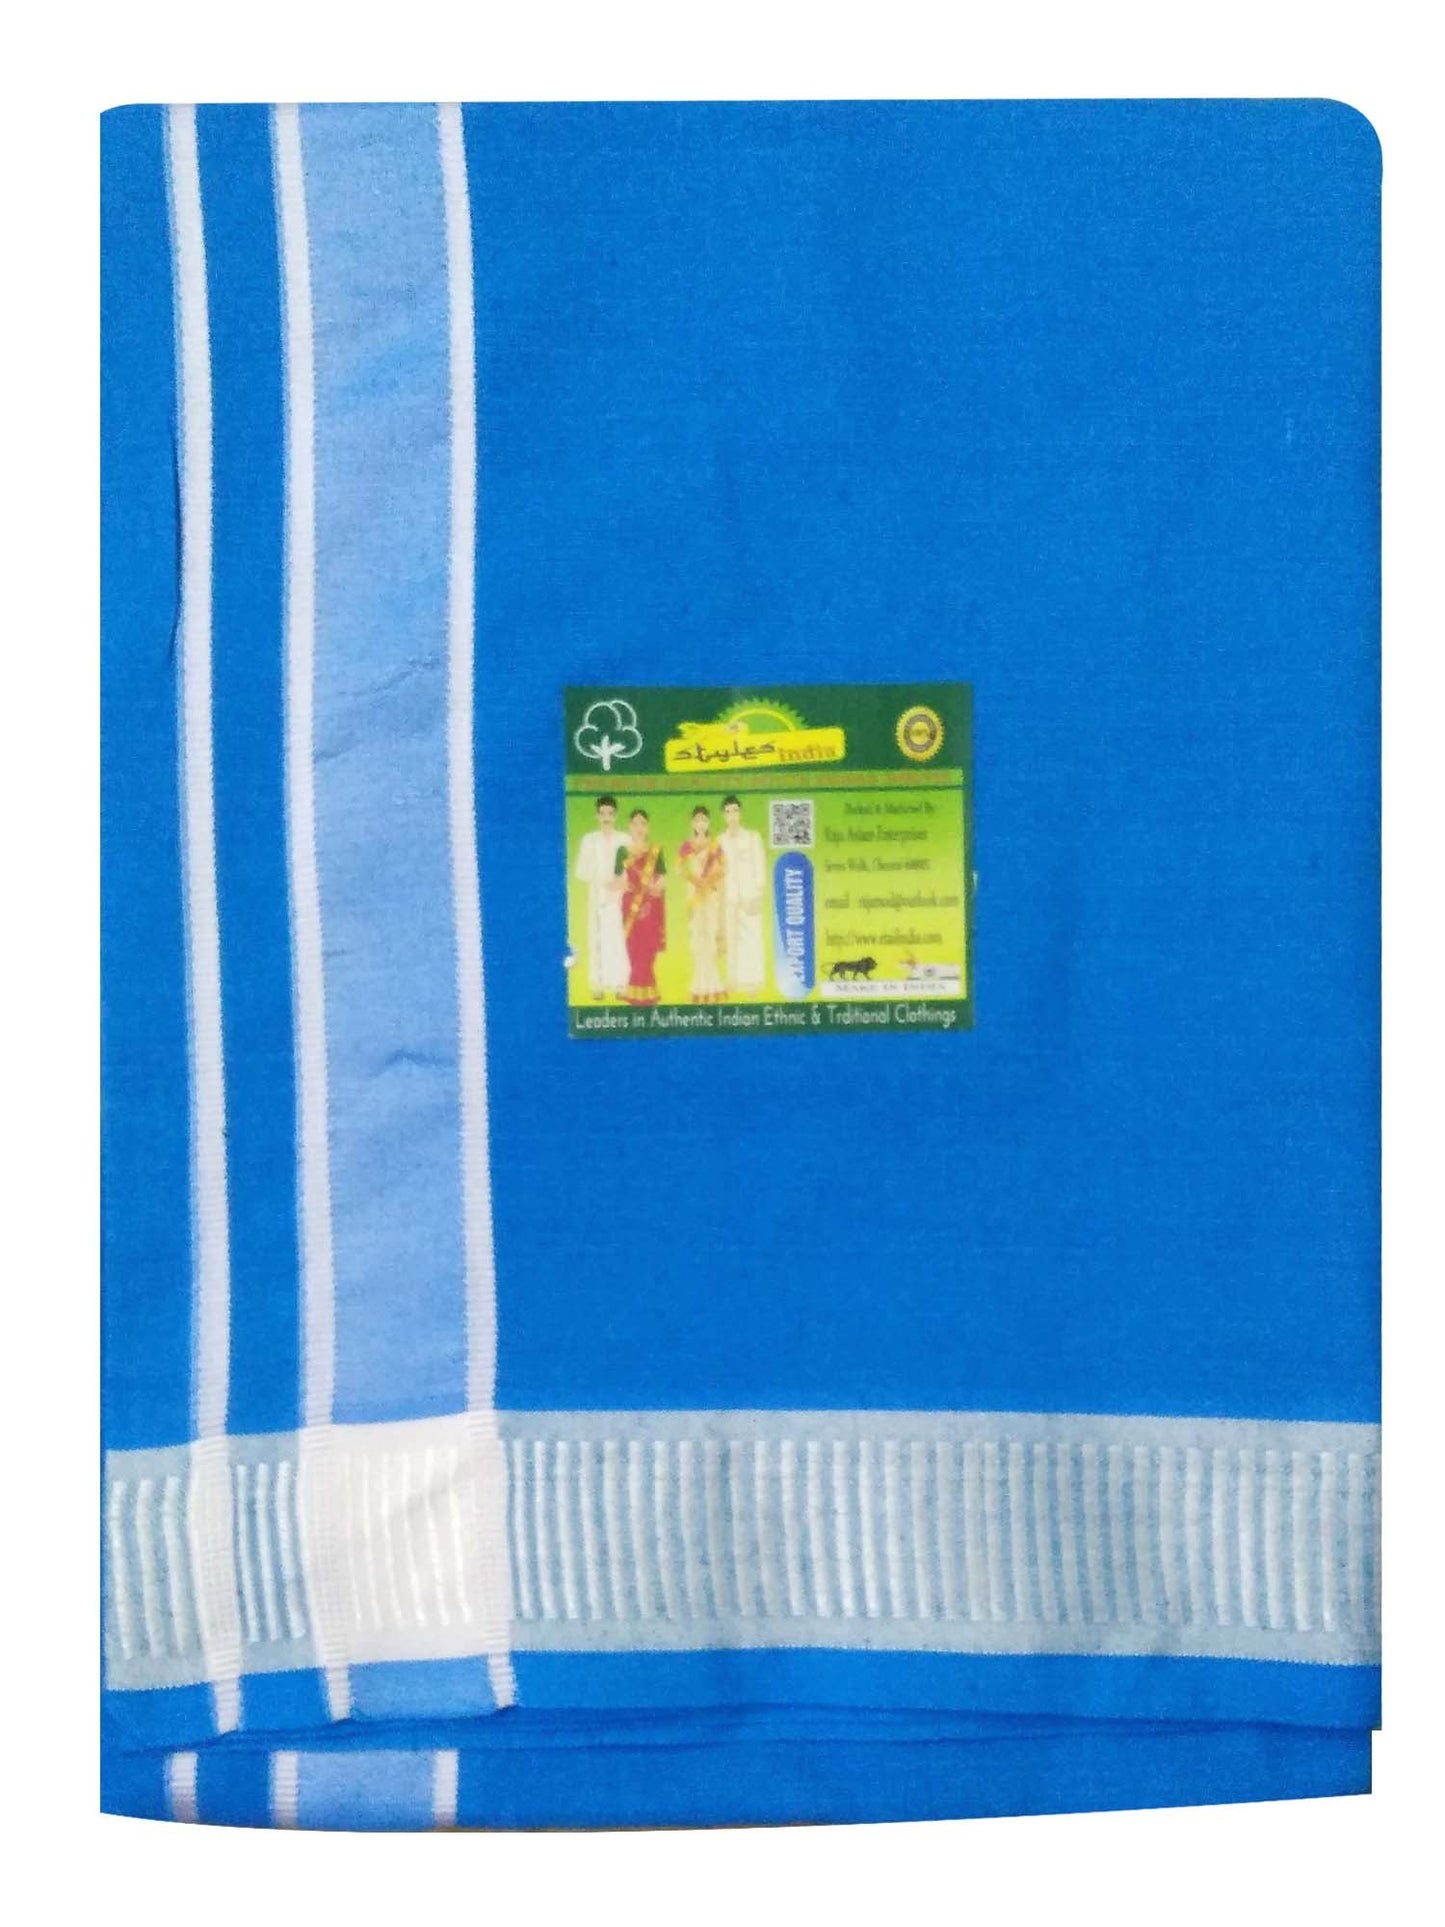 Stylesindia Men's Cotton Colored Dhoti with Fancy Border Kerala-style Veshti Mundu Kaili Lungi 2.0 Mtrs